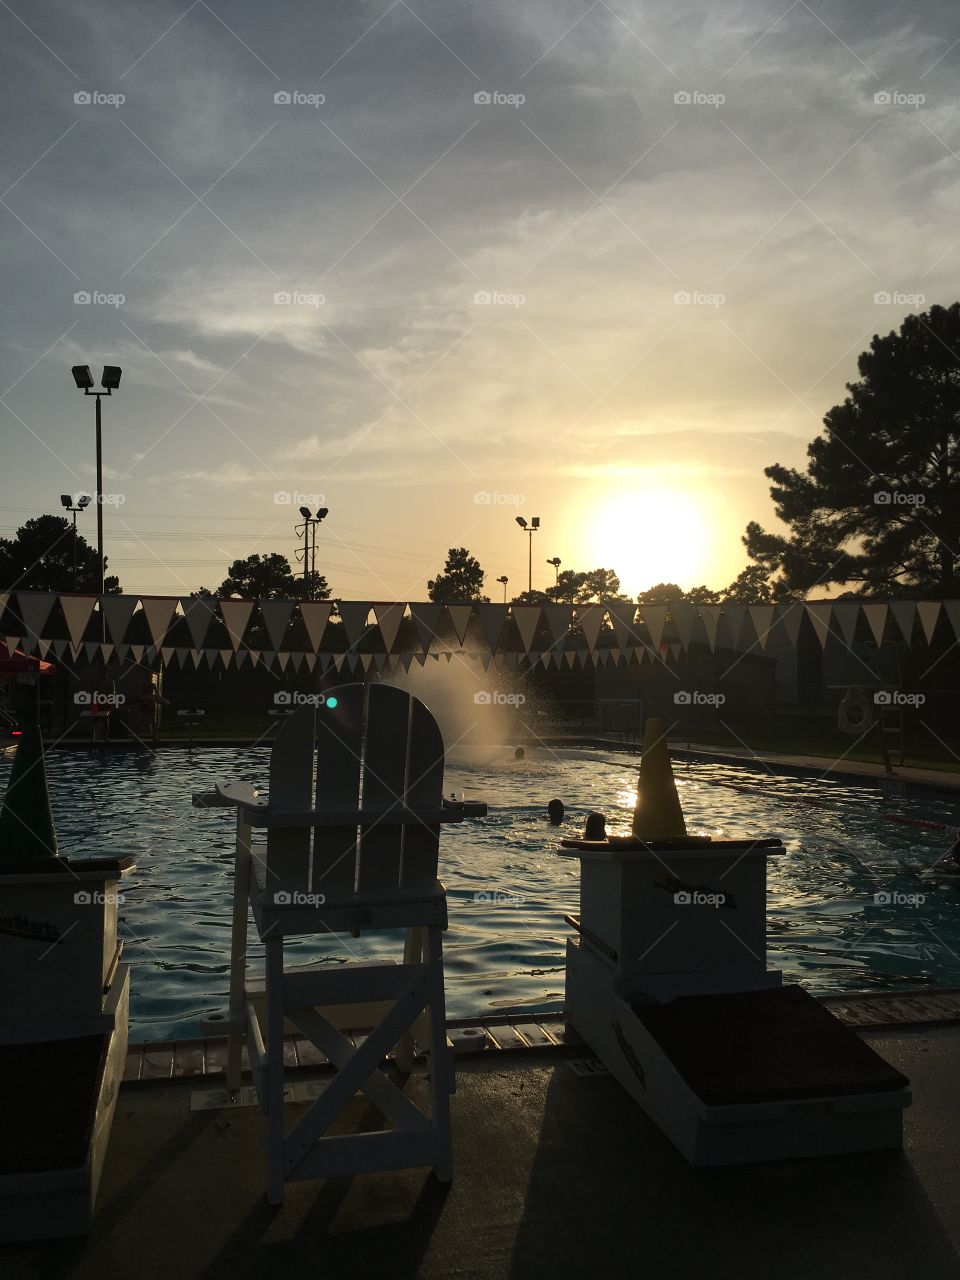 Enjoying the beautiful sunset in the pool 